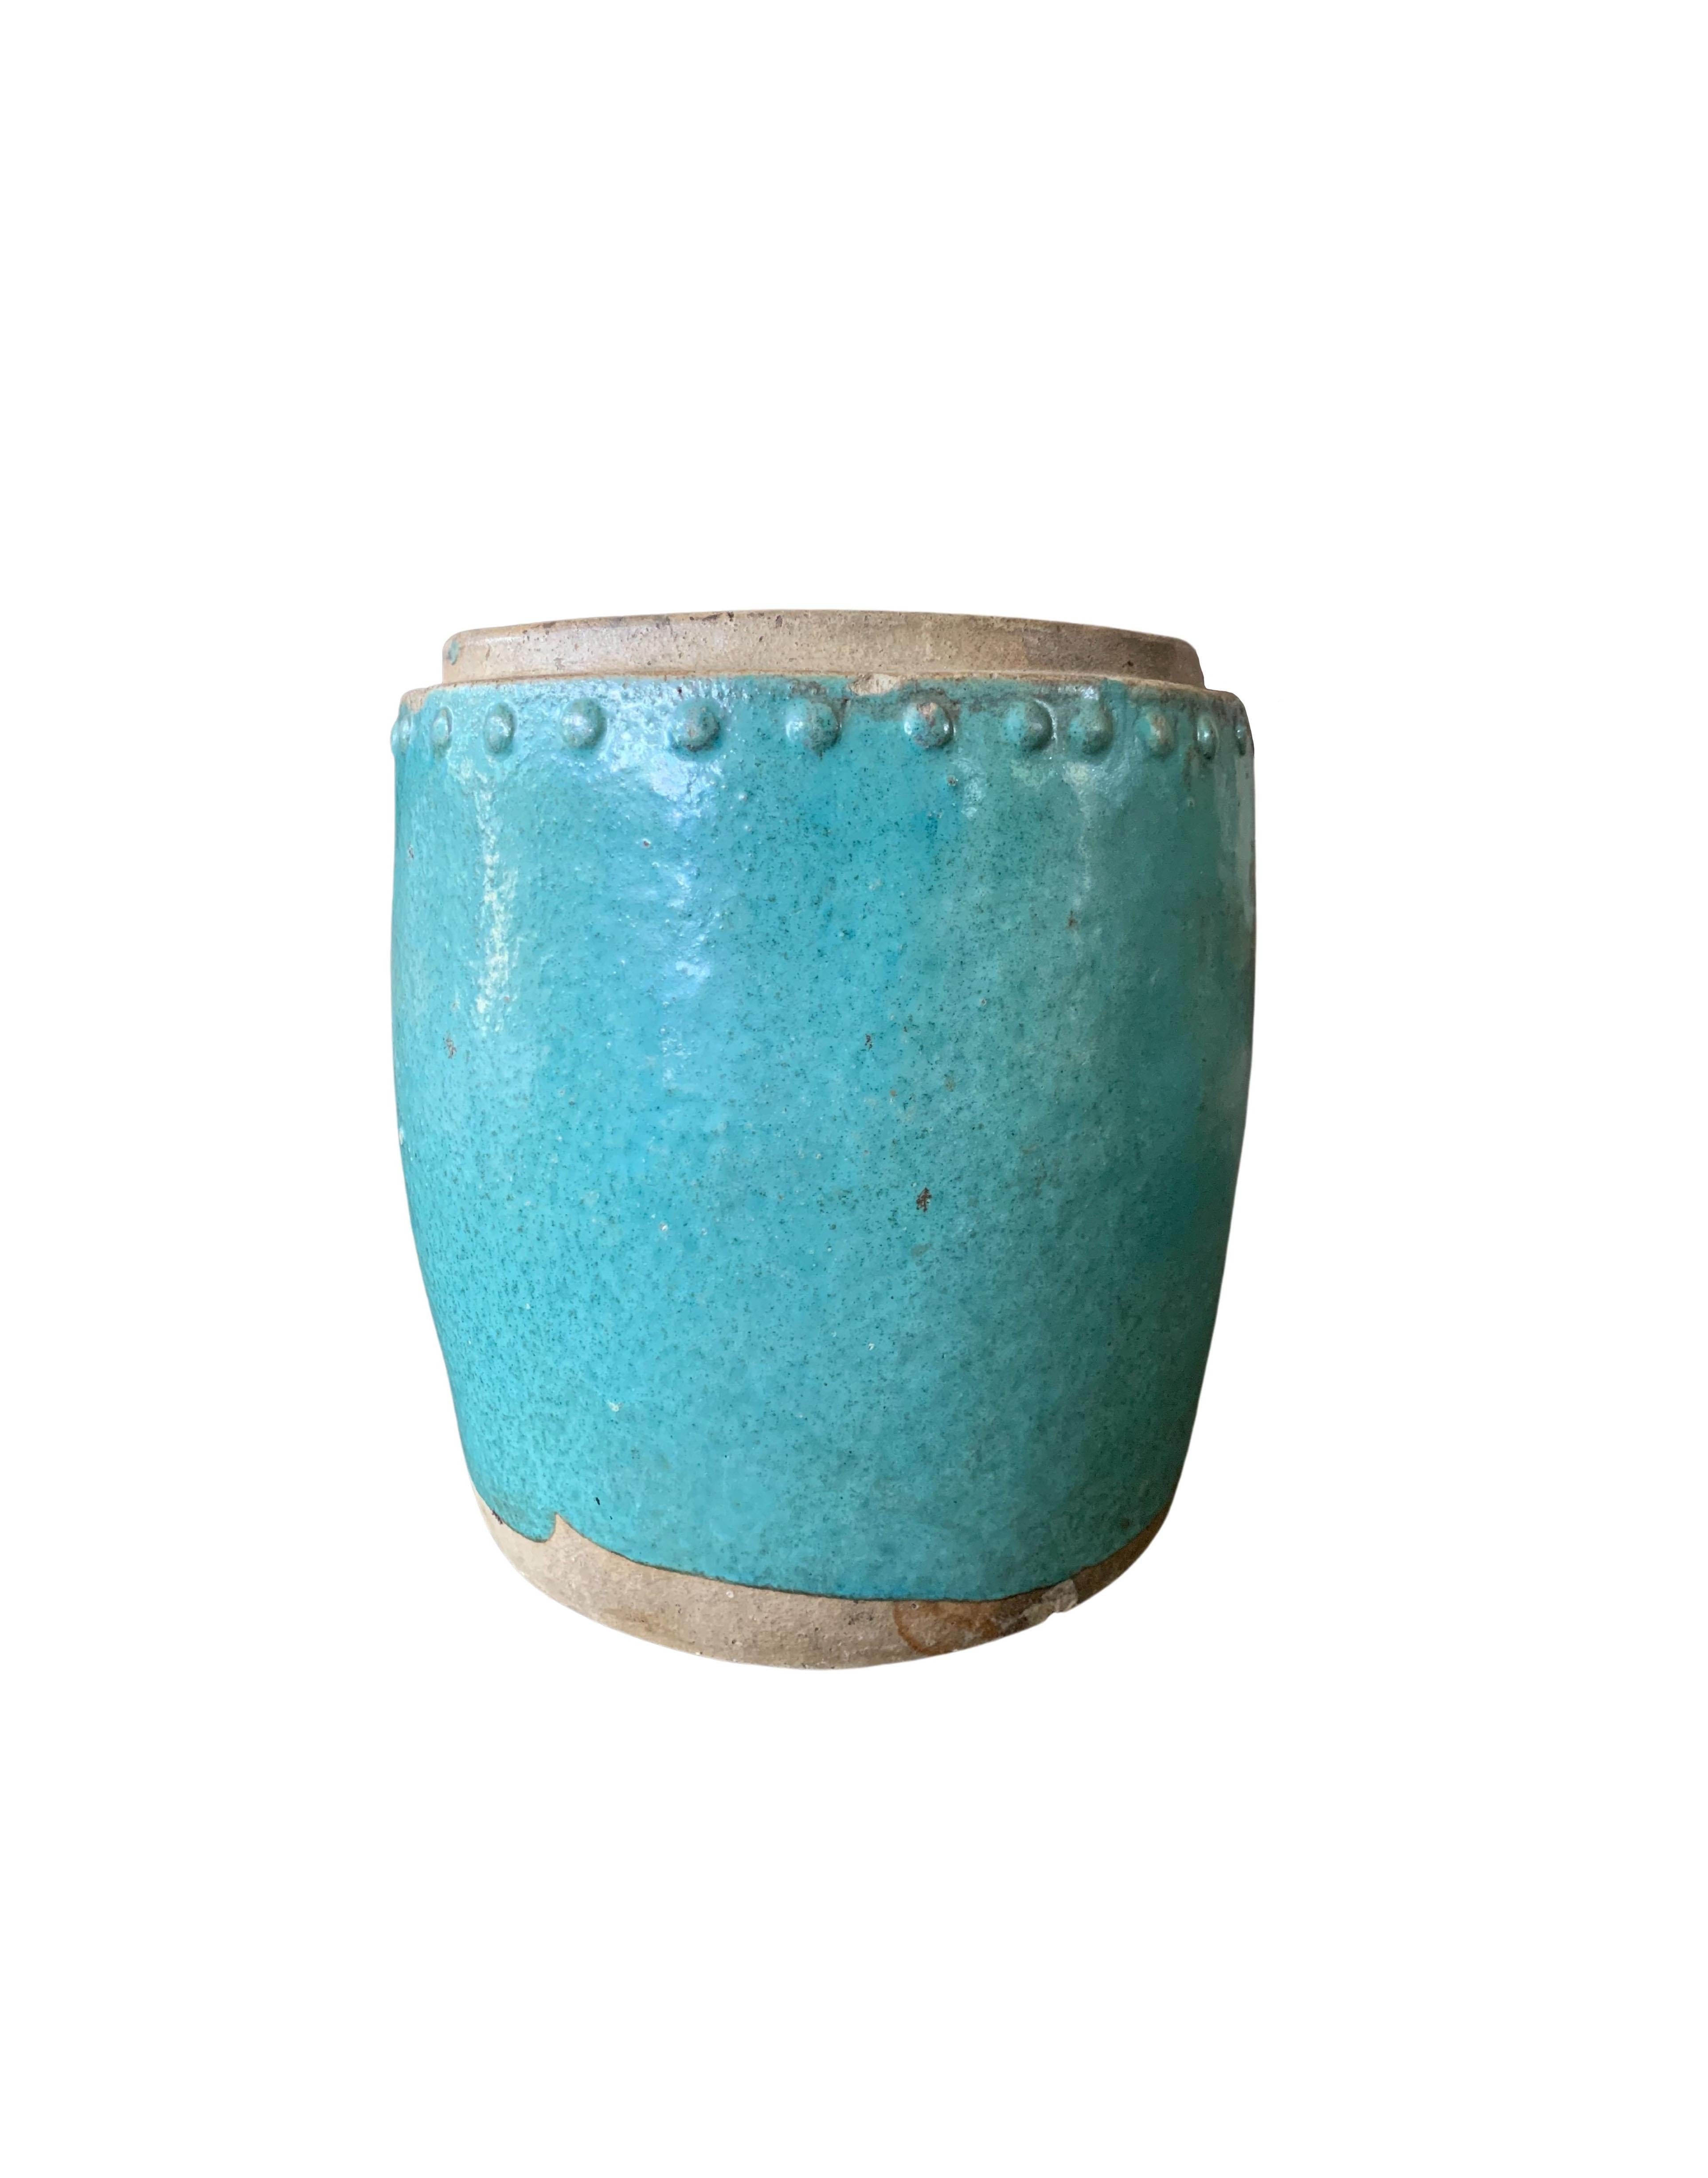 20th Century Chinese Shiwan Green & Blue Glazed Ceramic Jar / Planter, c. 1900 For Sale